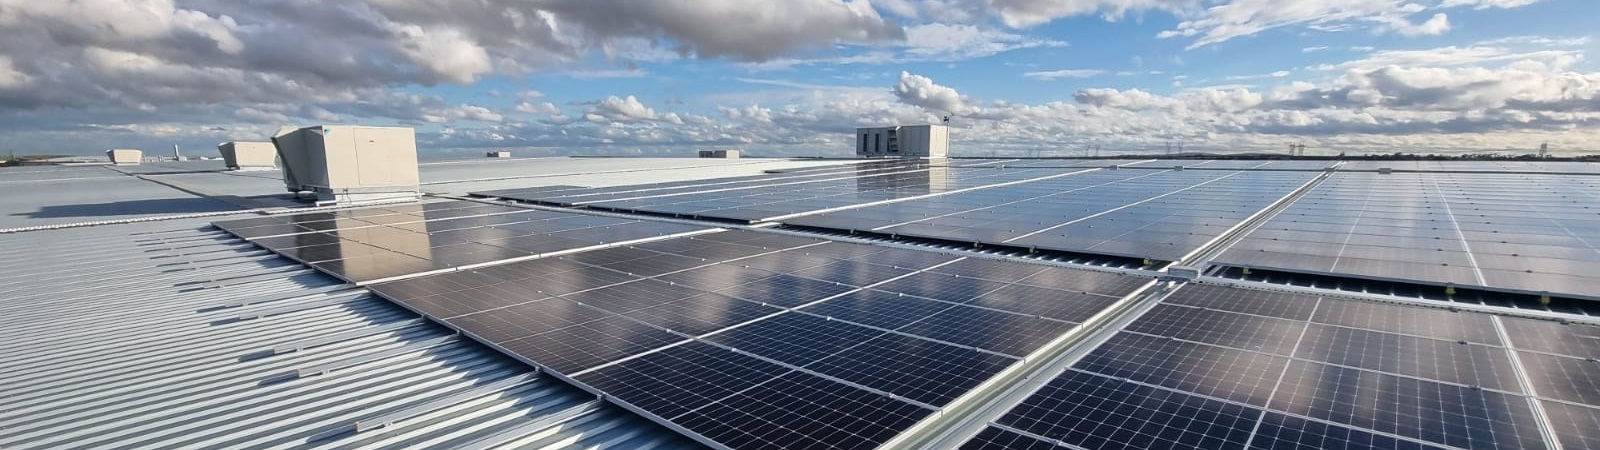 Choosing the Right Commercial Solar Power Equipment